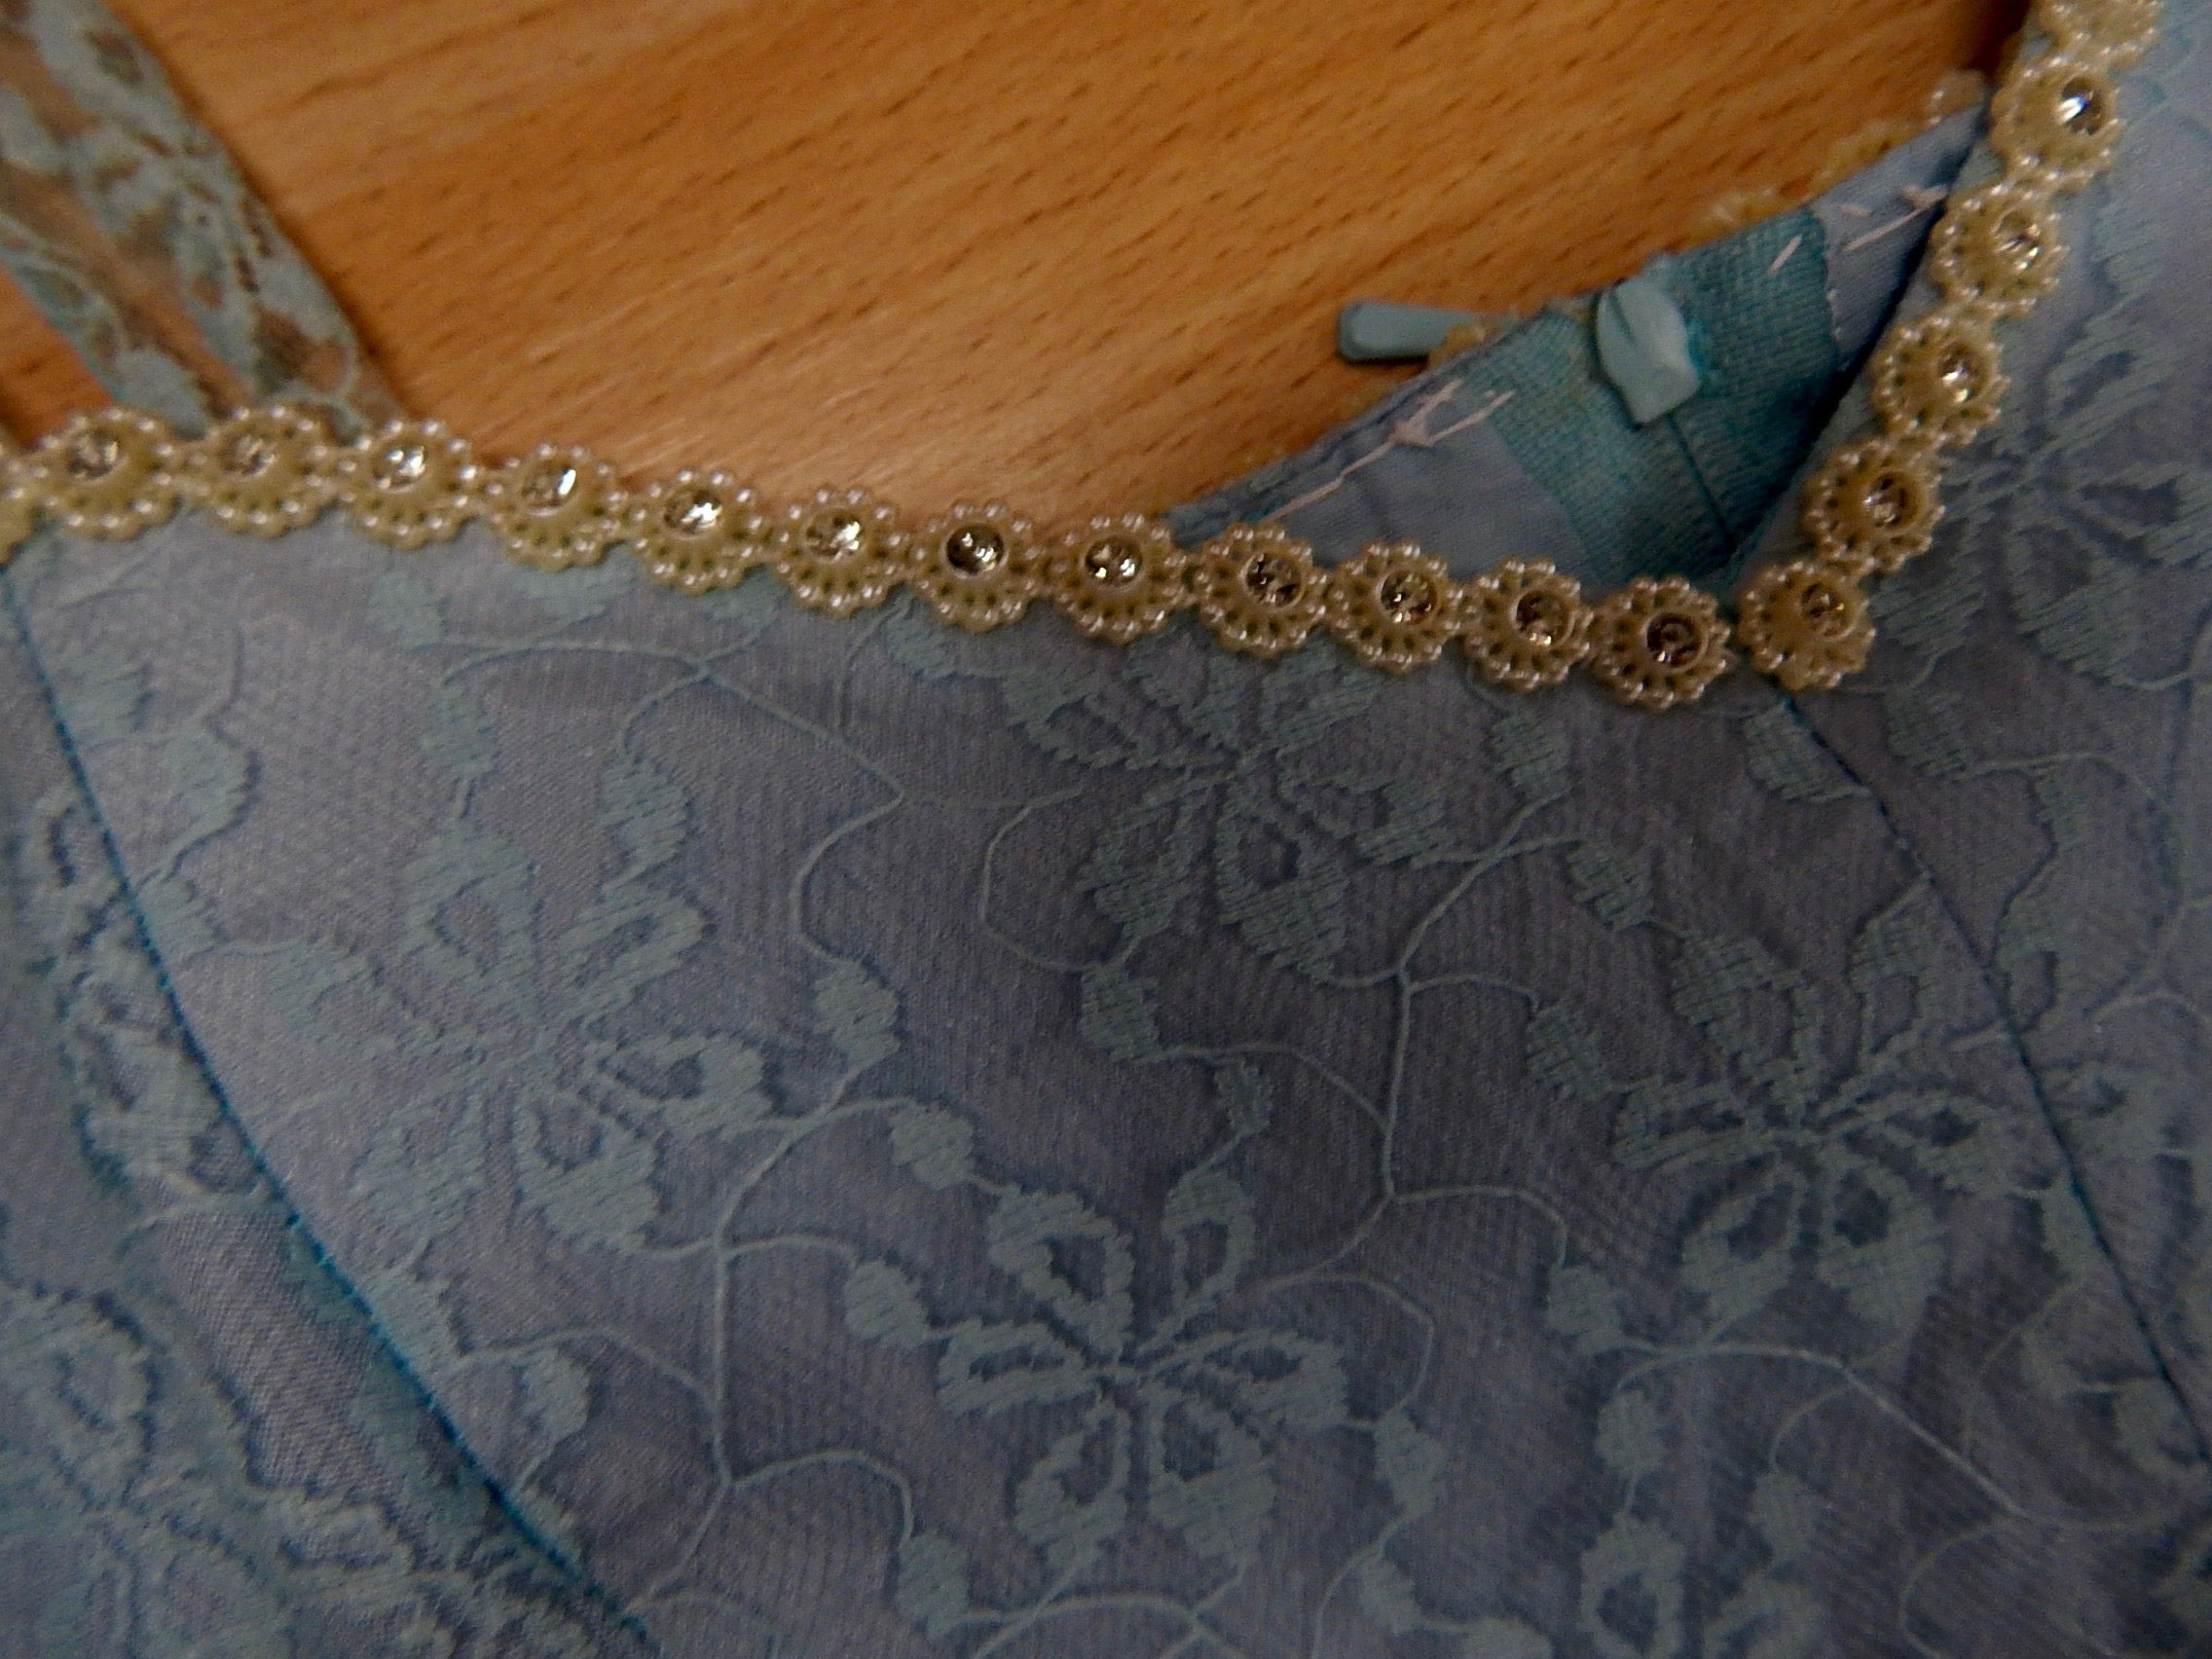 Vintage 50er Jahre Kleid Gr.34 Secondhand hellblau